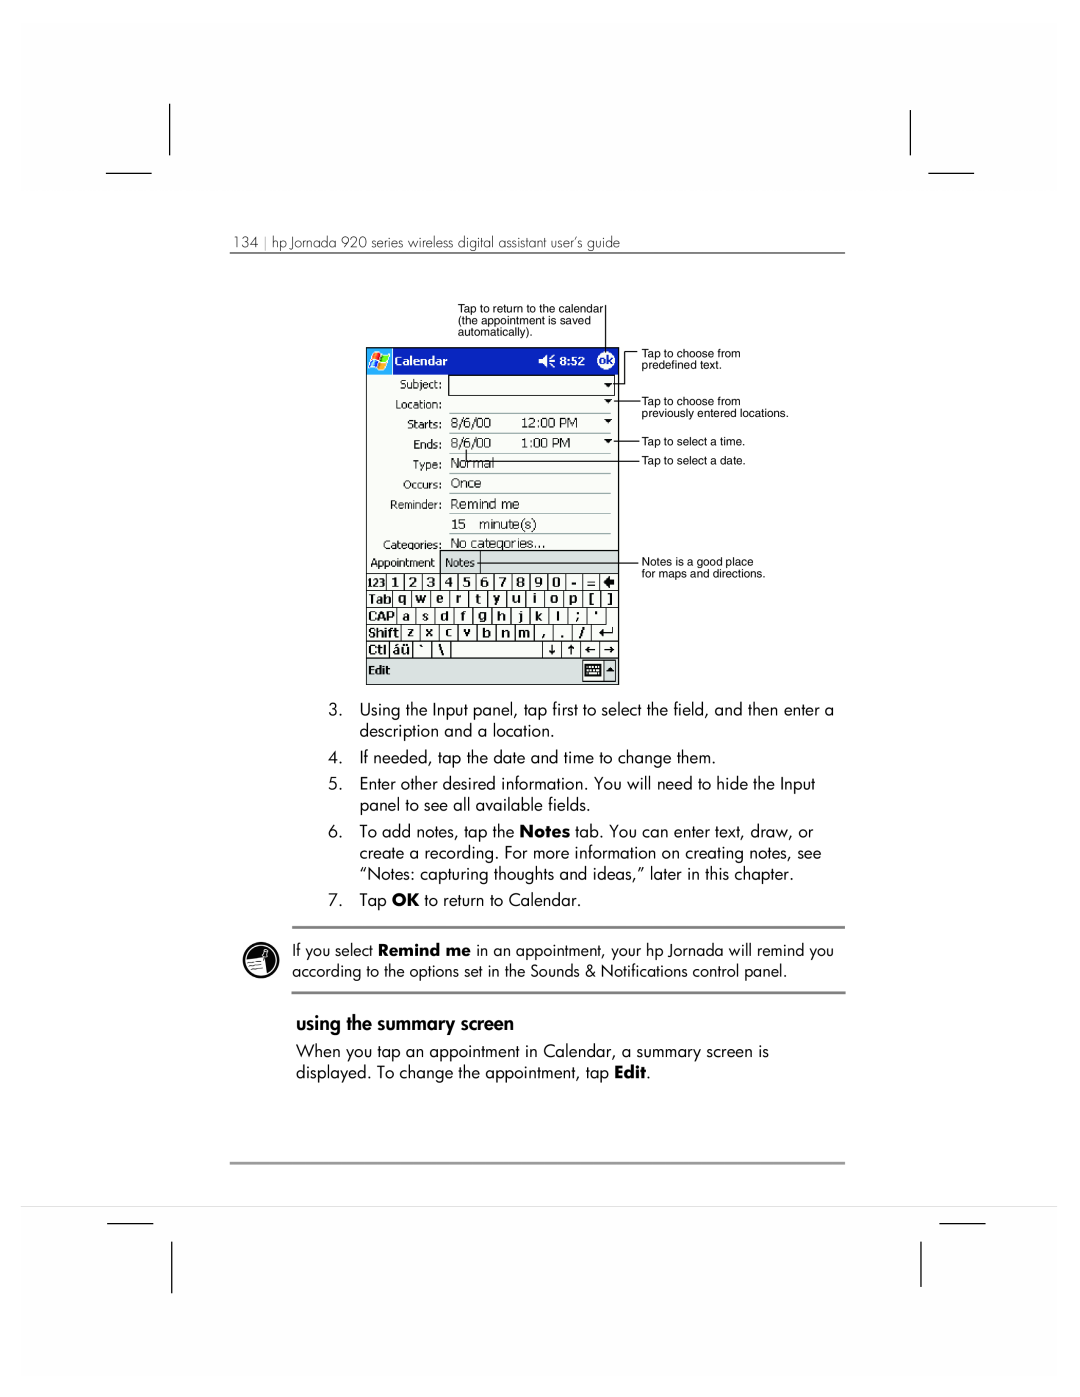 HP 920 manual using the summary screen 